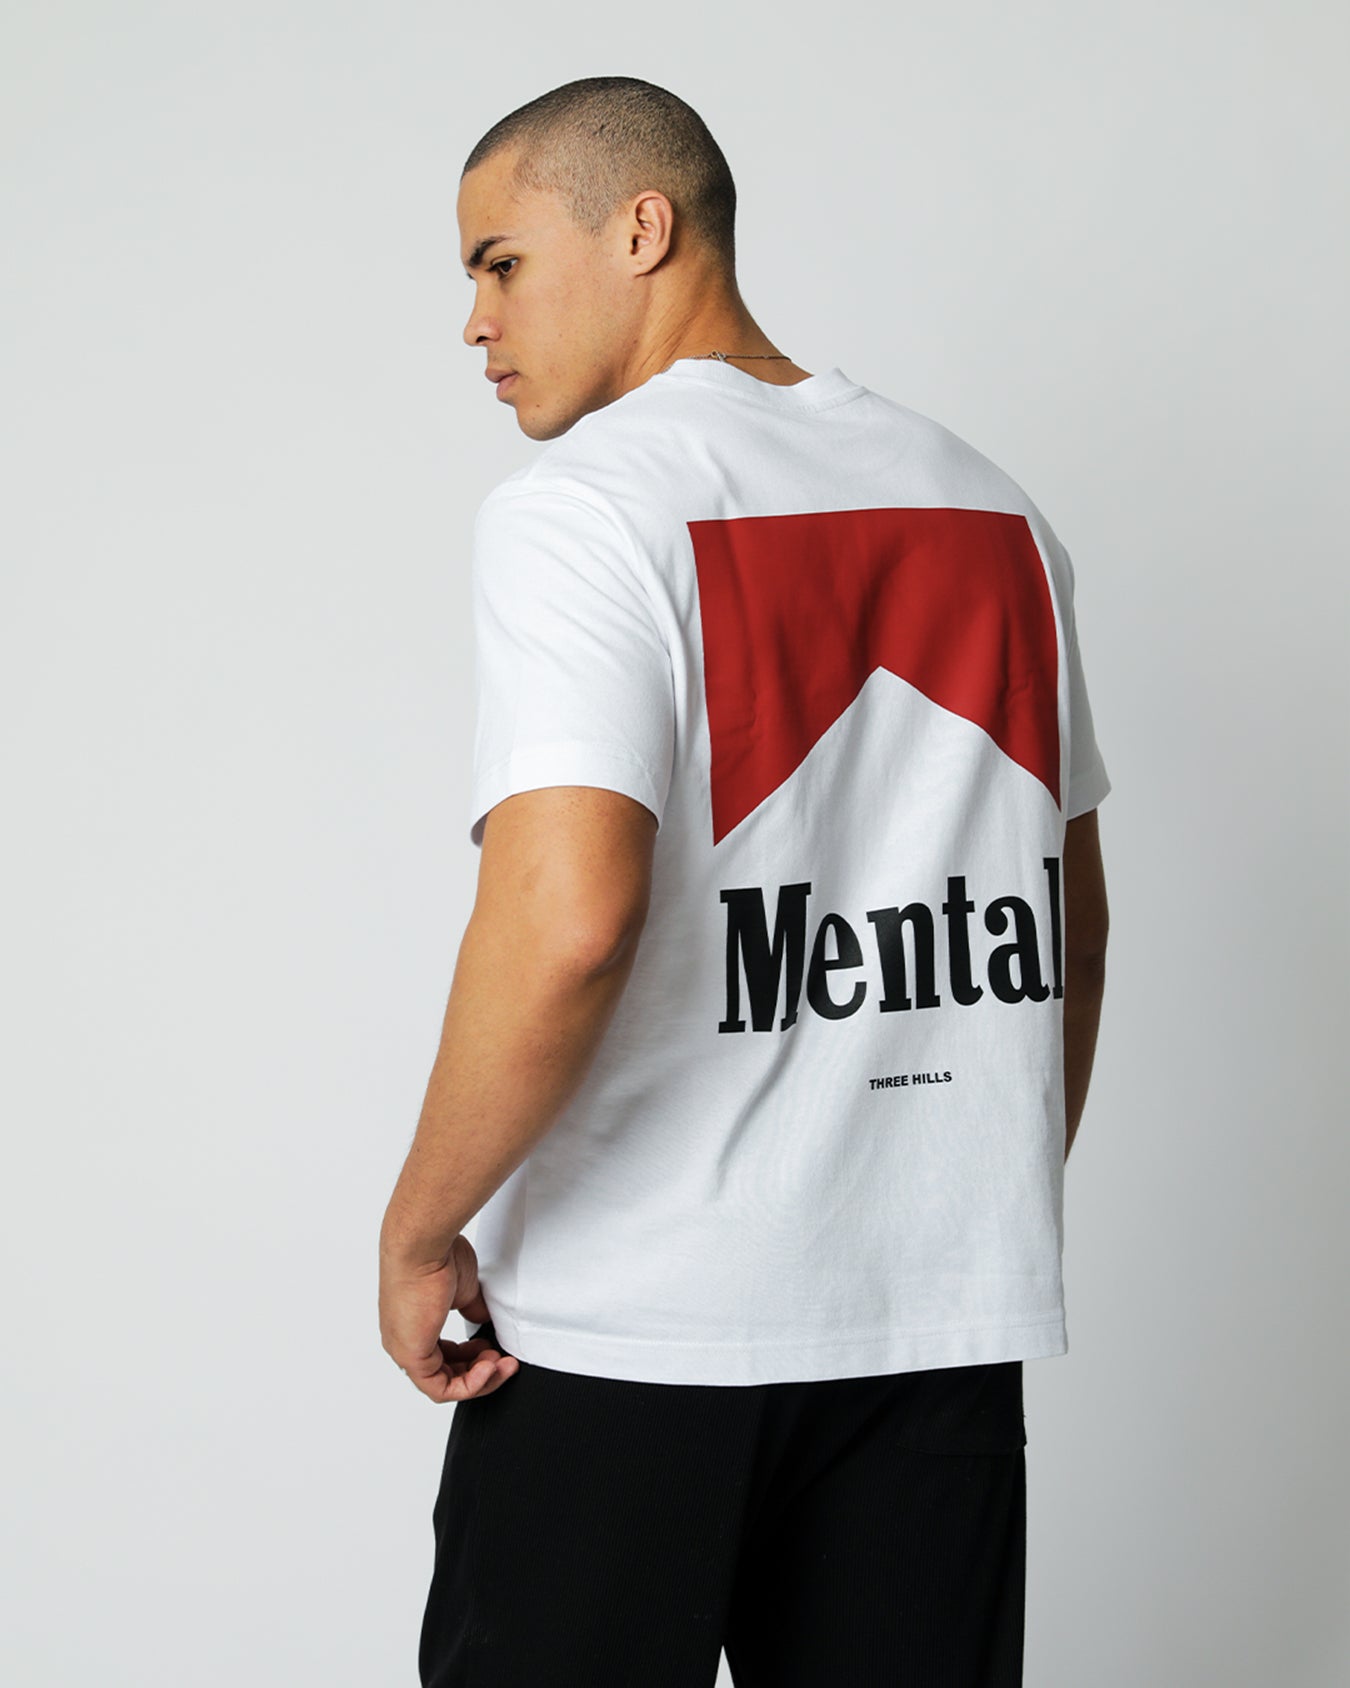 Mental T-Shirt White